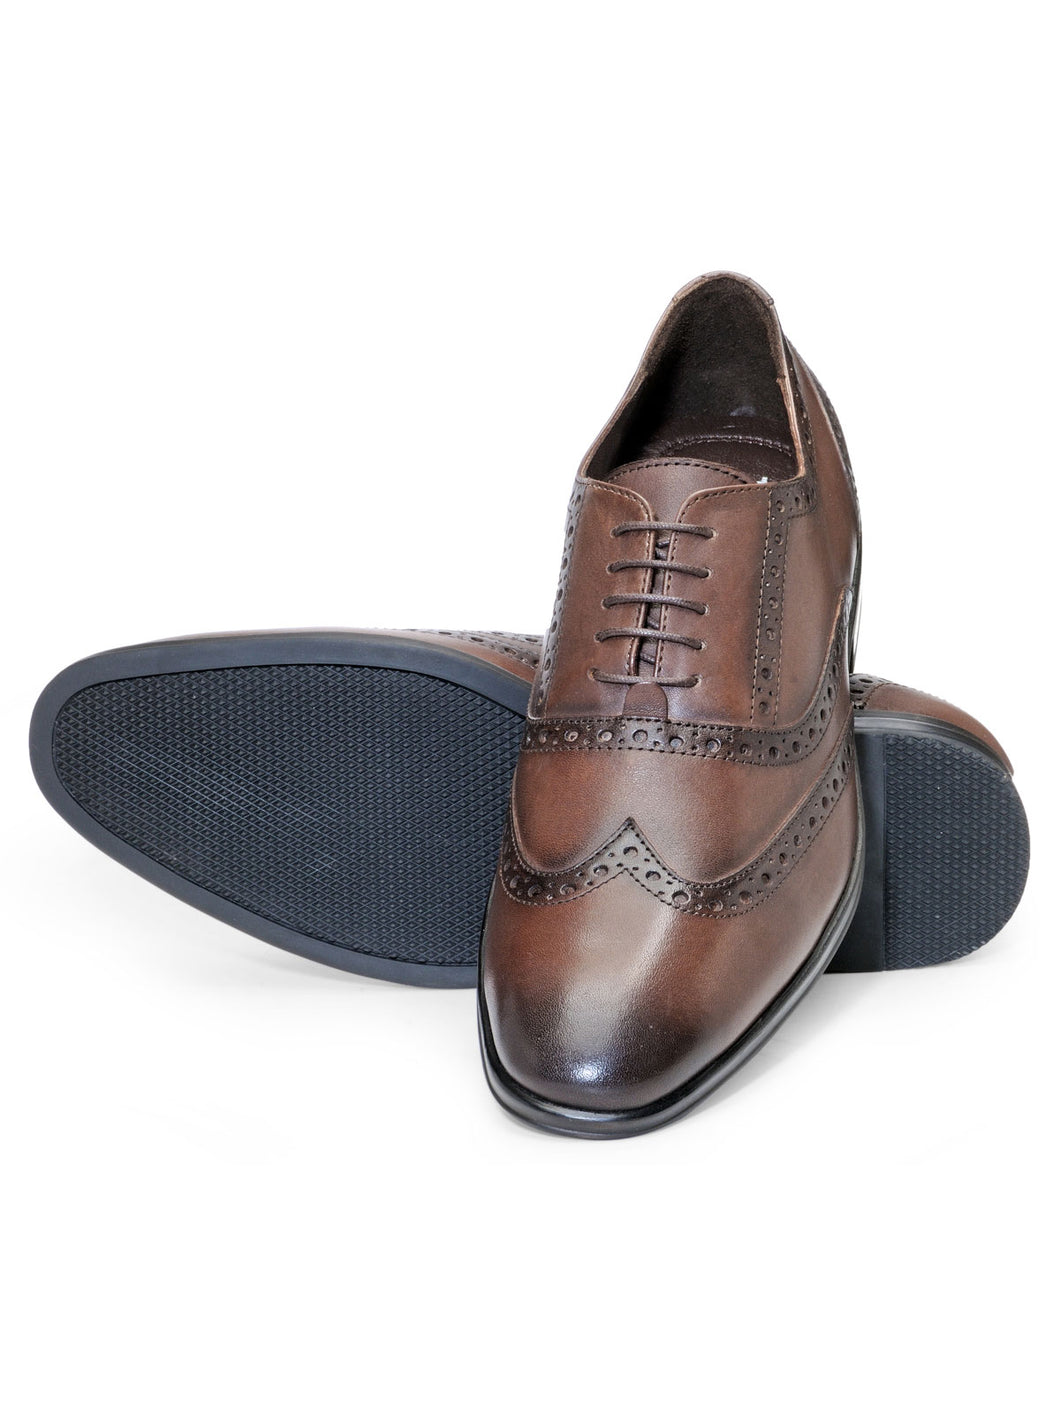 Teakwood Leather Men's Brown Oxford/Brogue Shoes